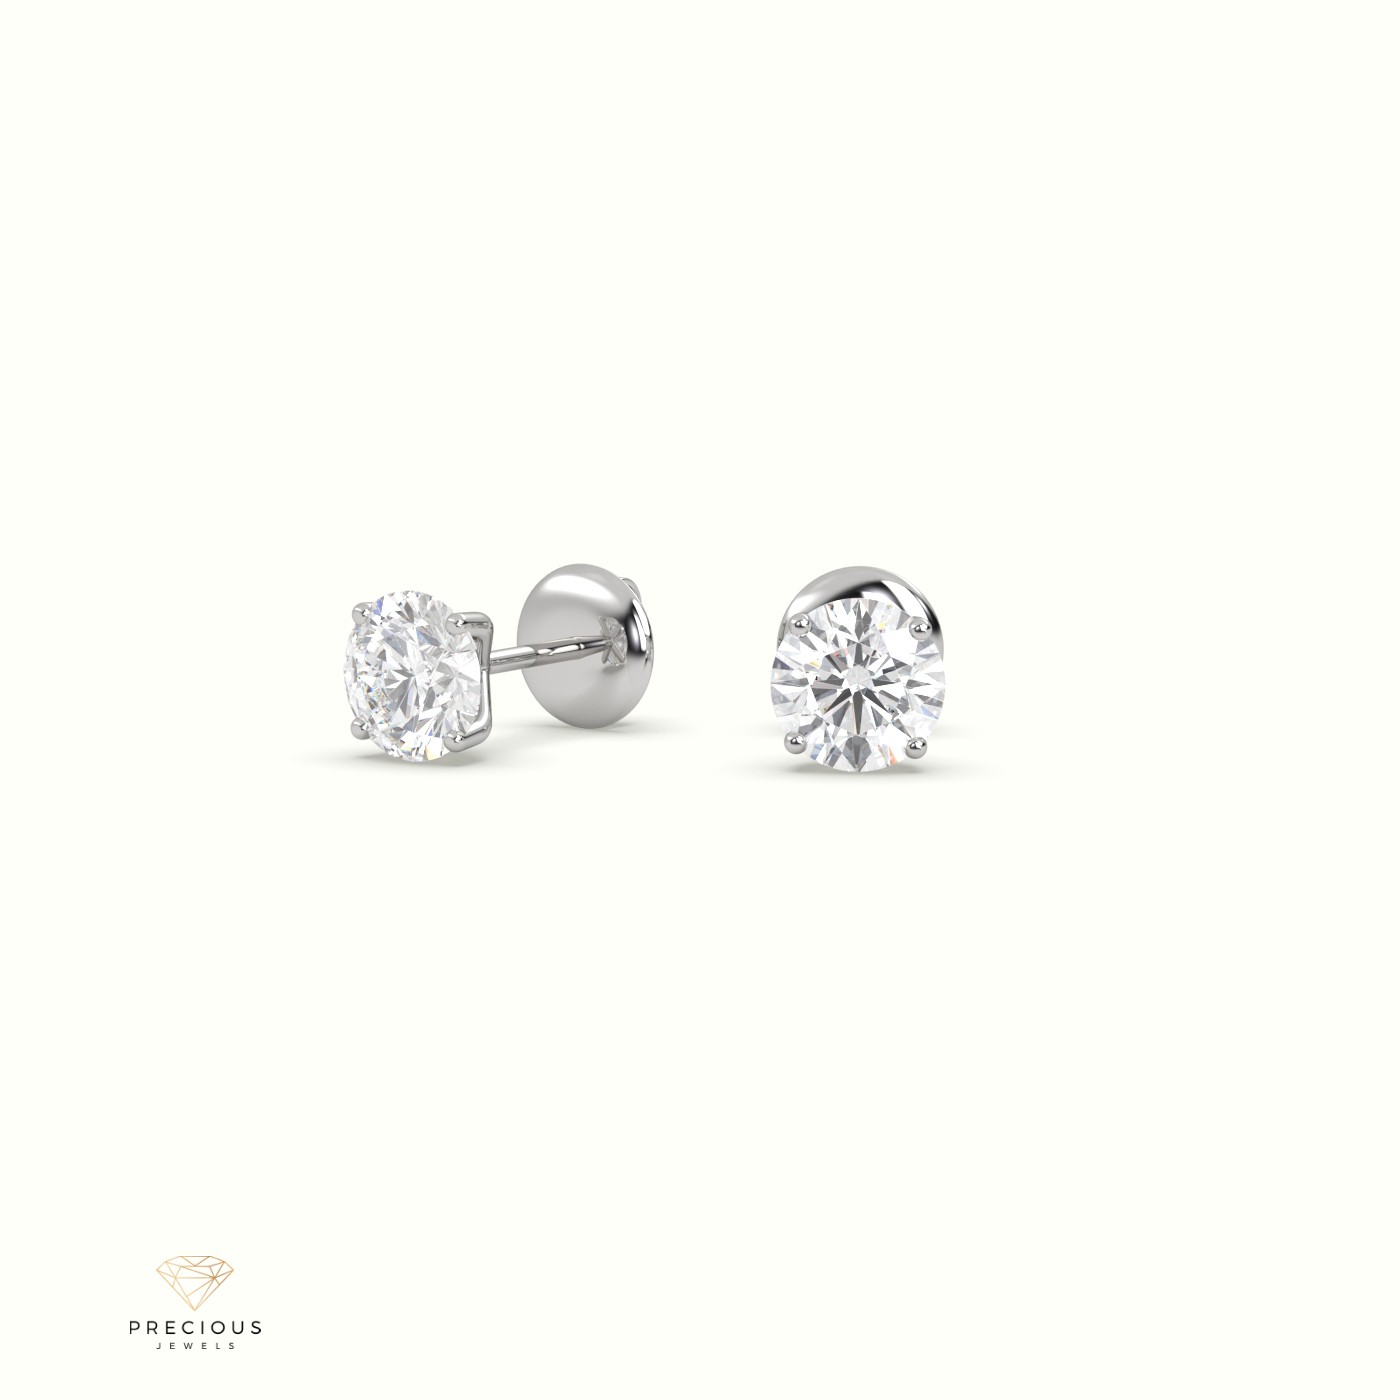 18k white gold 4 prongs round diamond studs earrings - free setting